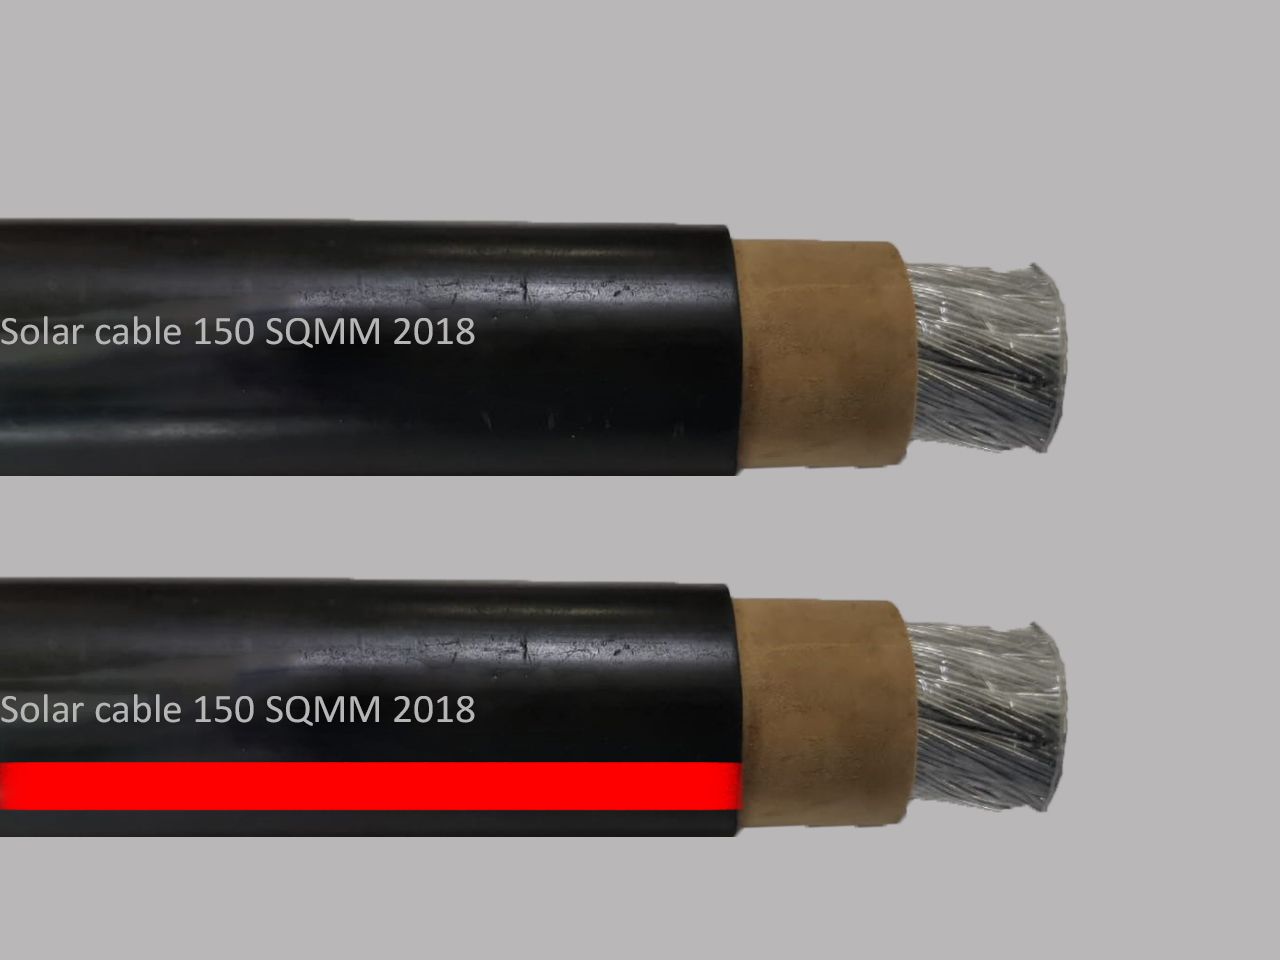 en-certified-dc-solar-cable-150sqm-500mtr-drum-red_1_1_1.jpg